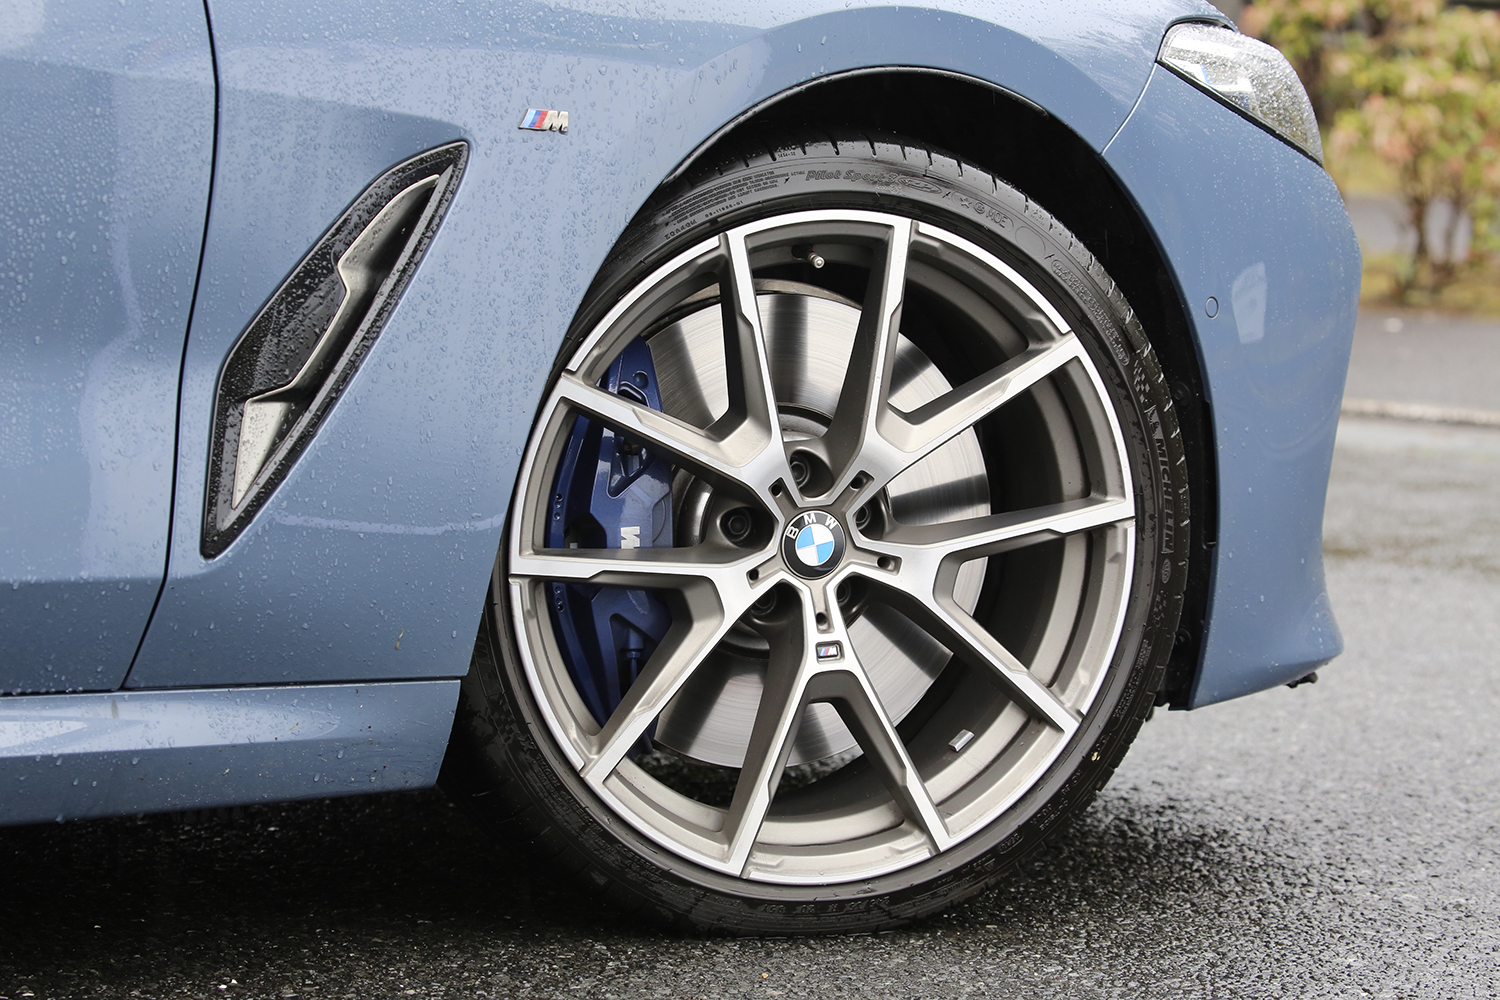 BMWに標準指定されているランフラットタイヤ